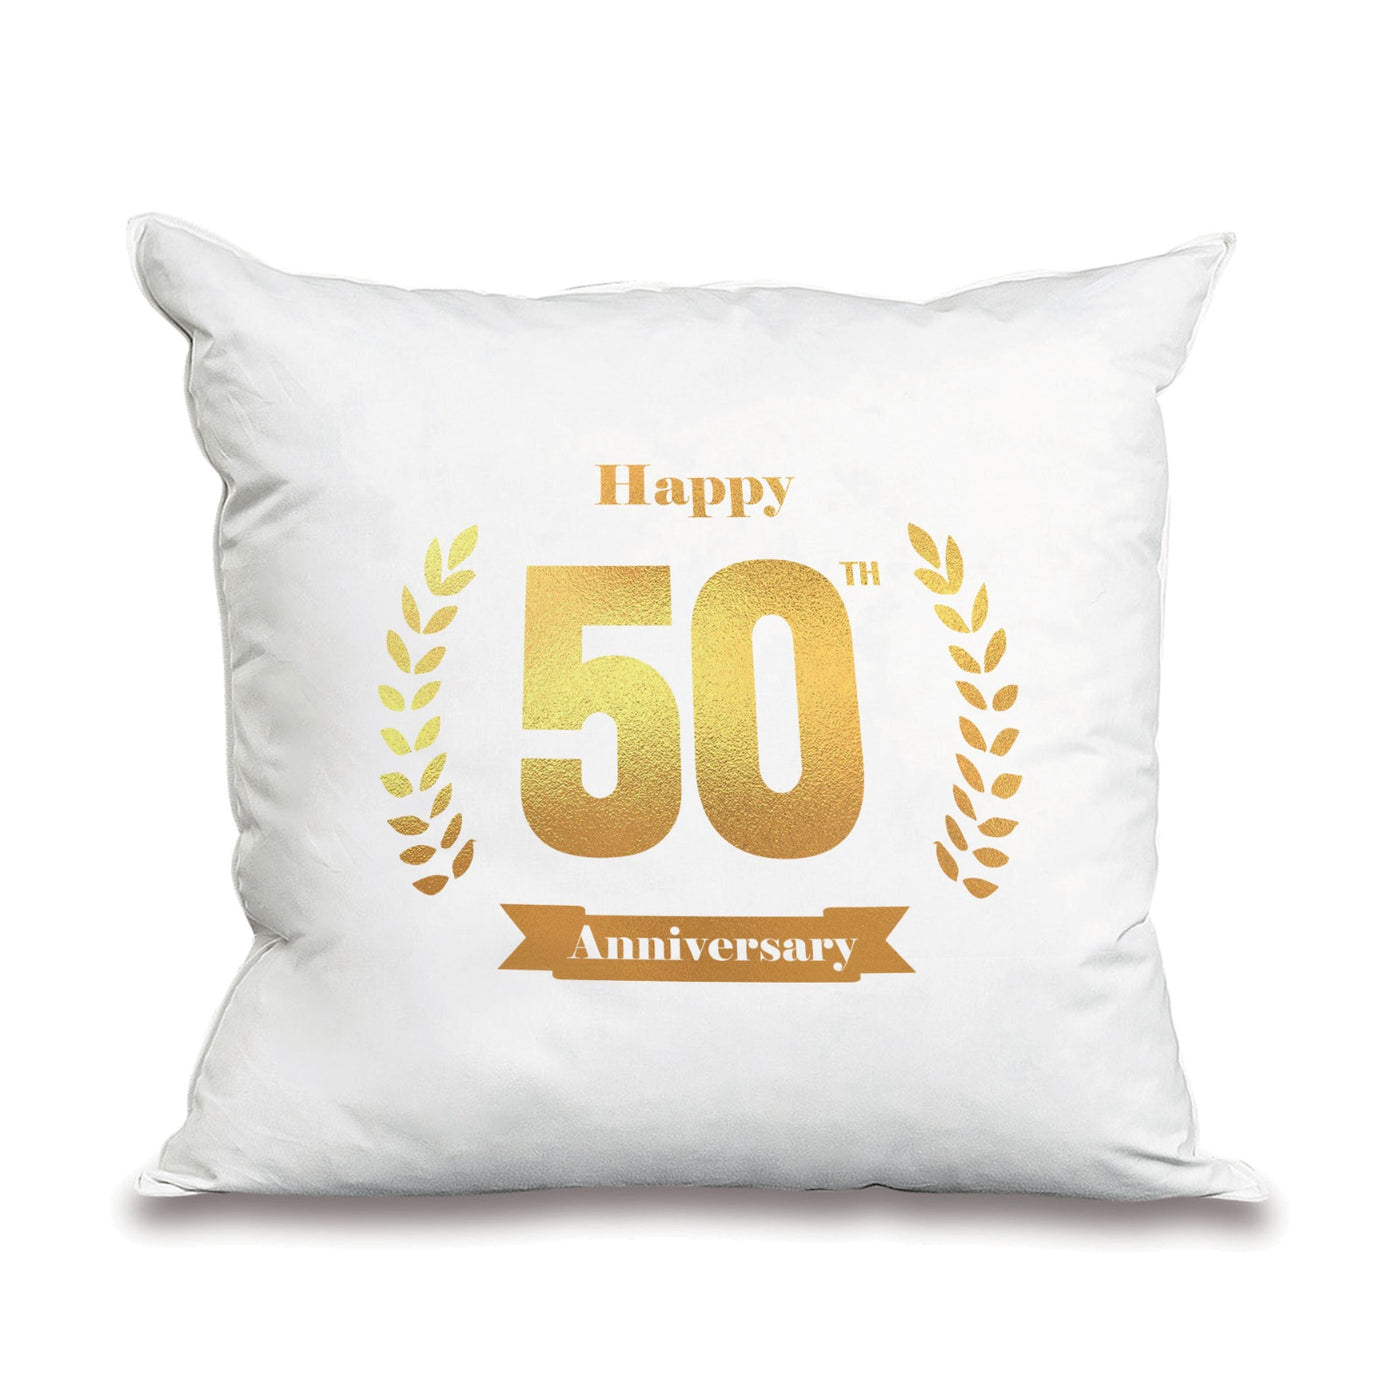 Happy 50th Anniversary Cushion